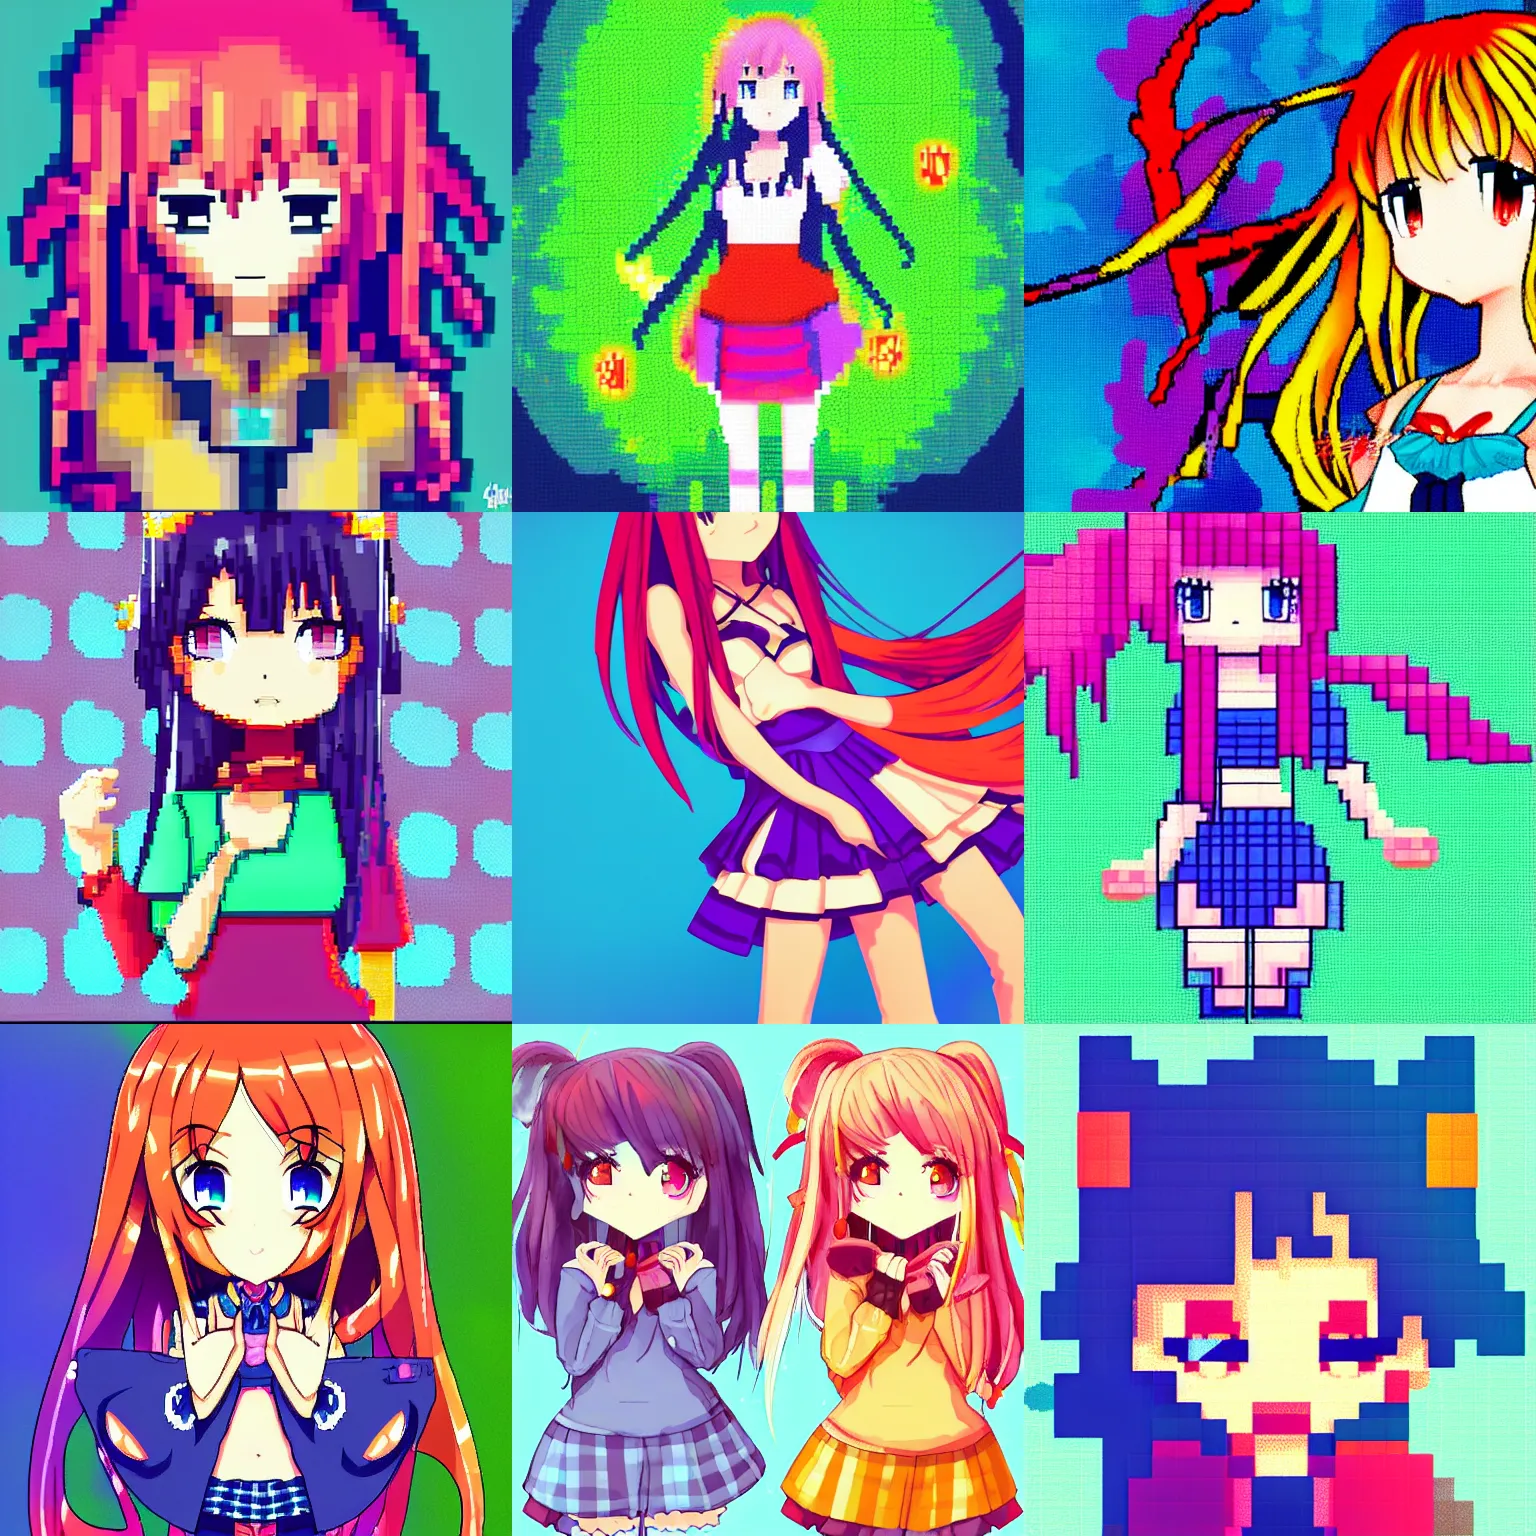 Prompt: anime girl, colorful, pixel art, 1 6 bits, 2 d